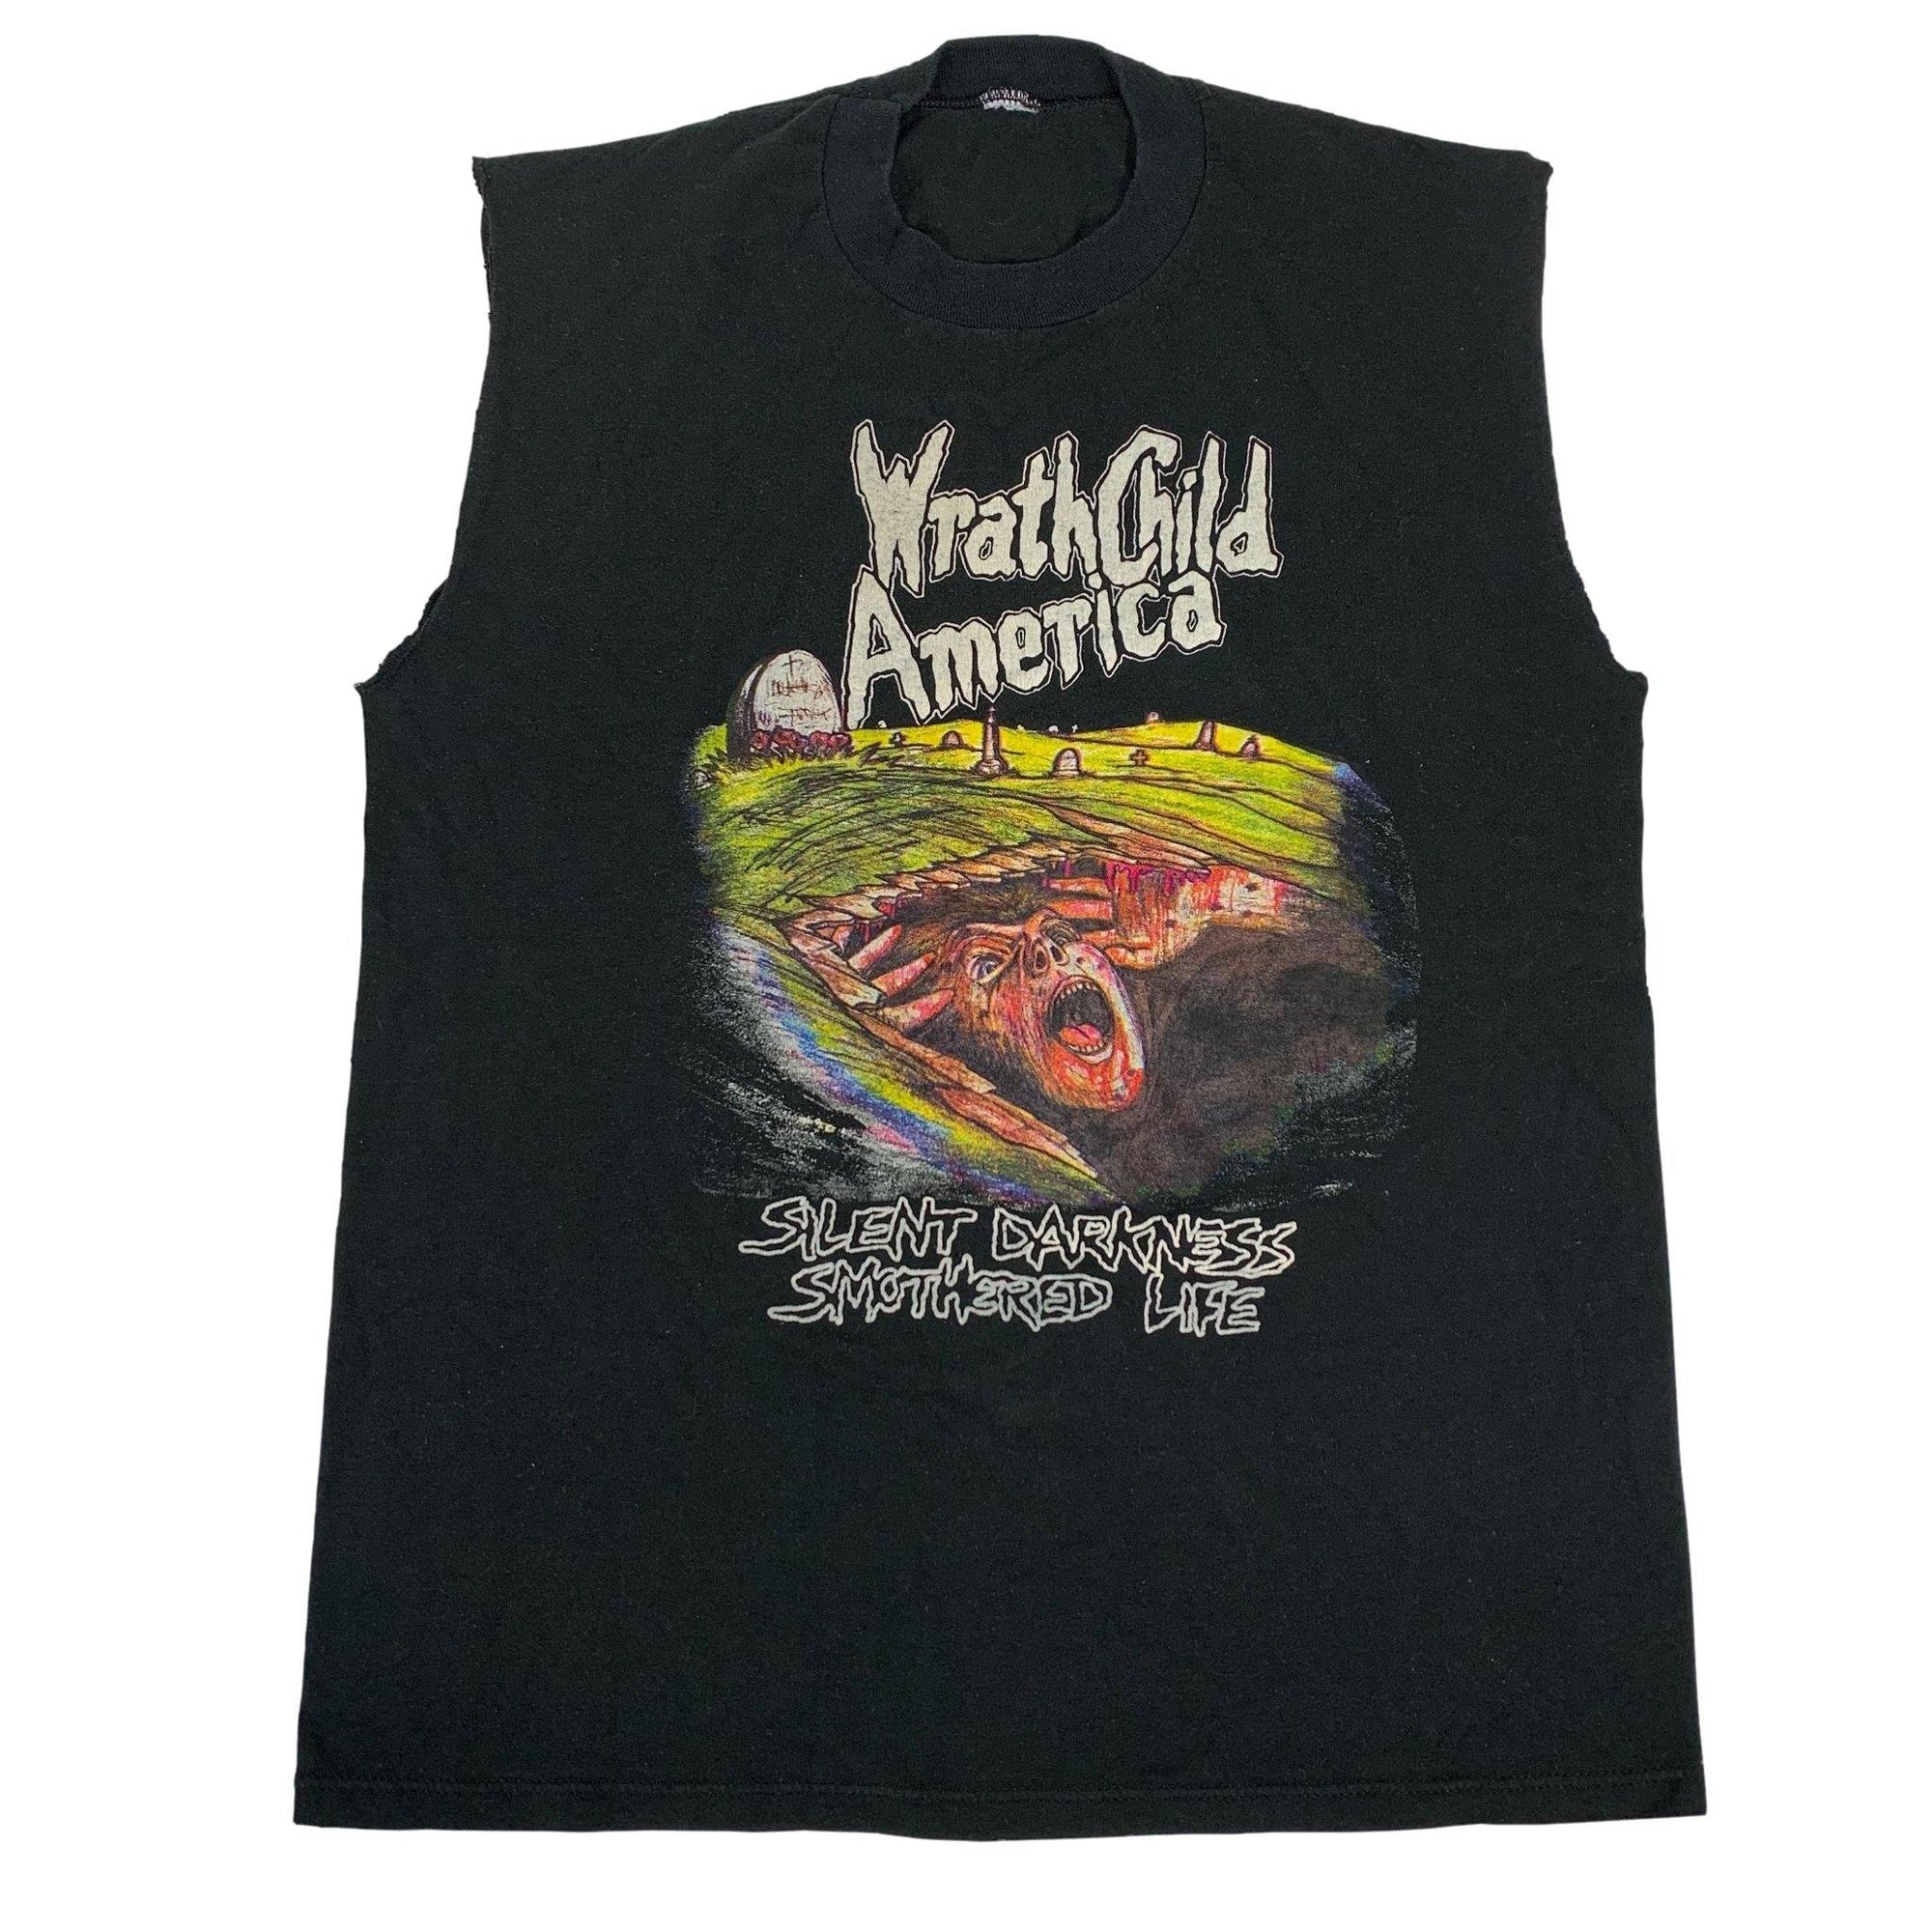 Vintage Wrathchild America "Silent Darkness" Sleeveless T-Shirt - jointcustodydc